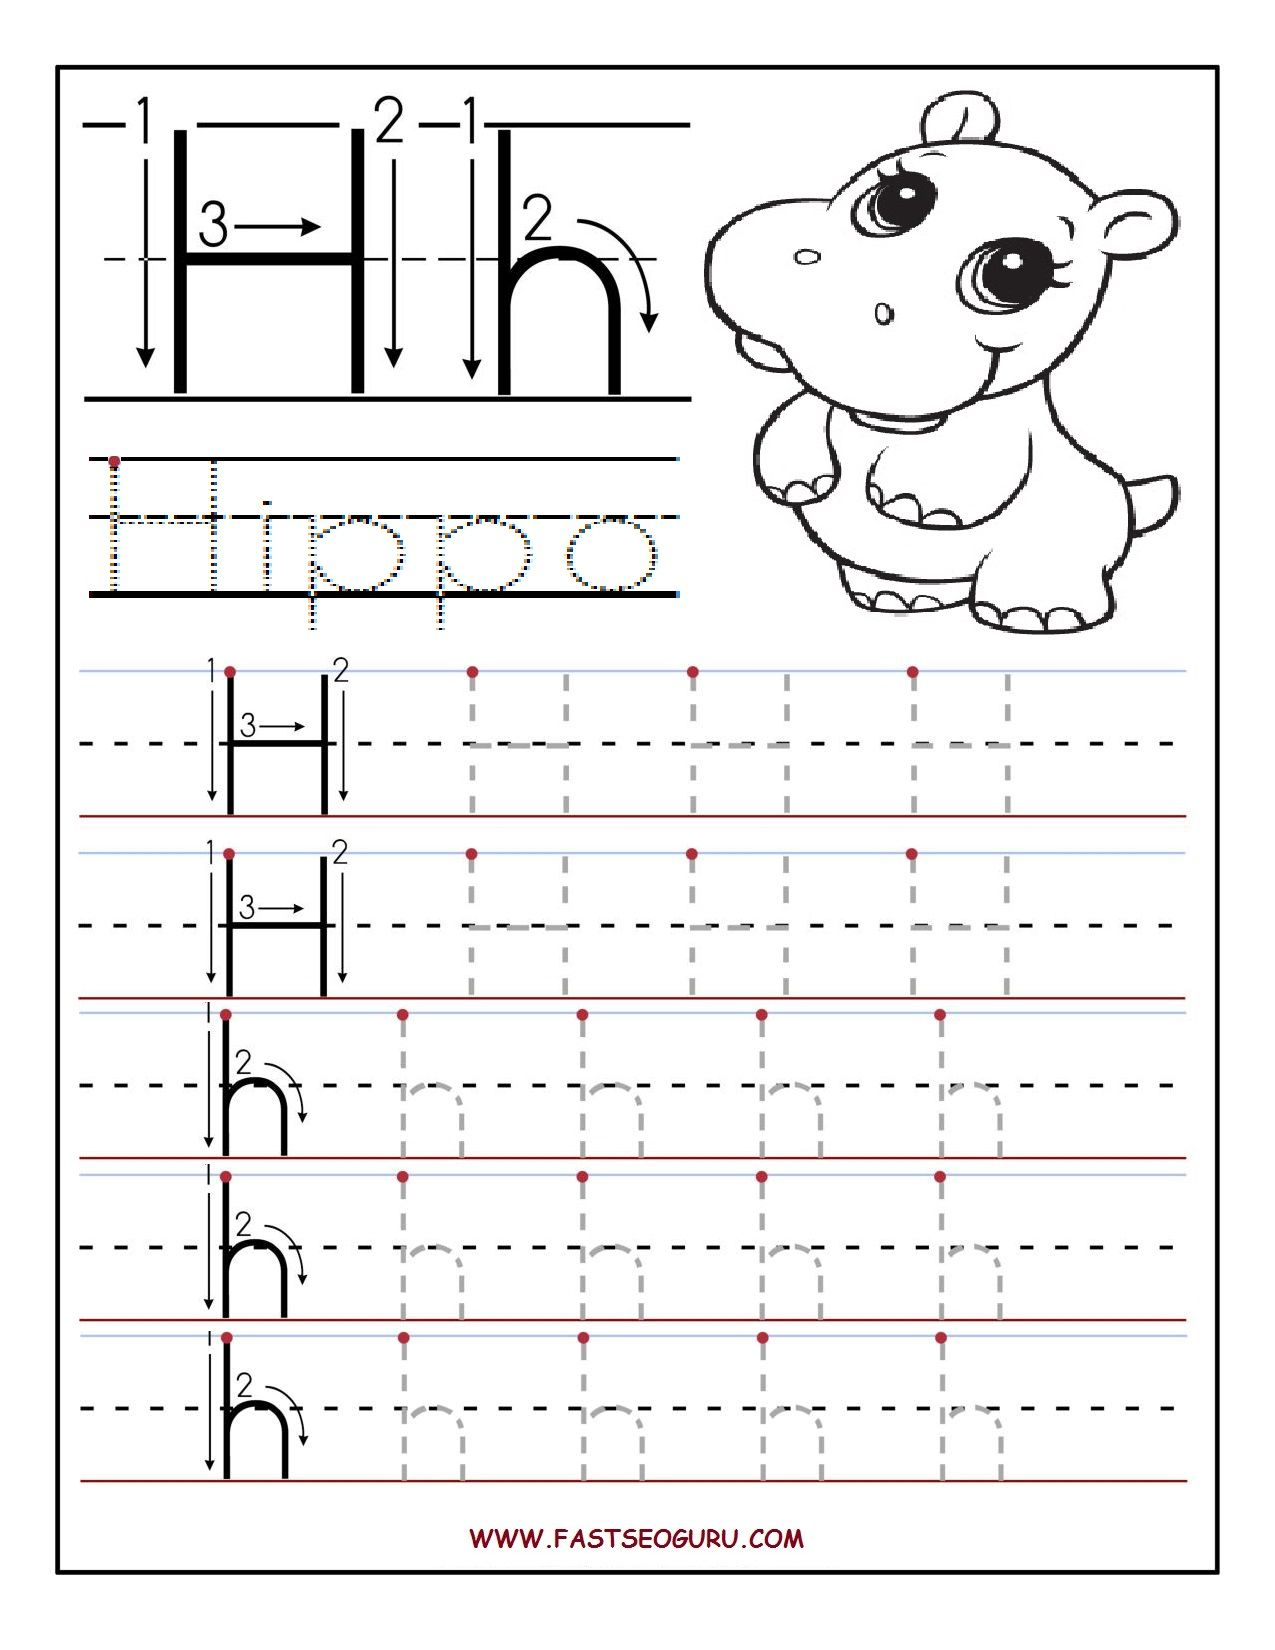 Printable Letter H Tracing Worksheets For Preschool with Letter H Worksheets For Toddlers